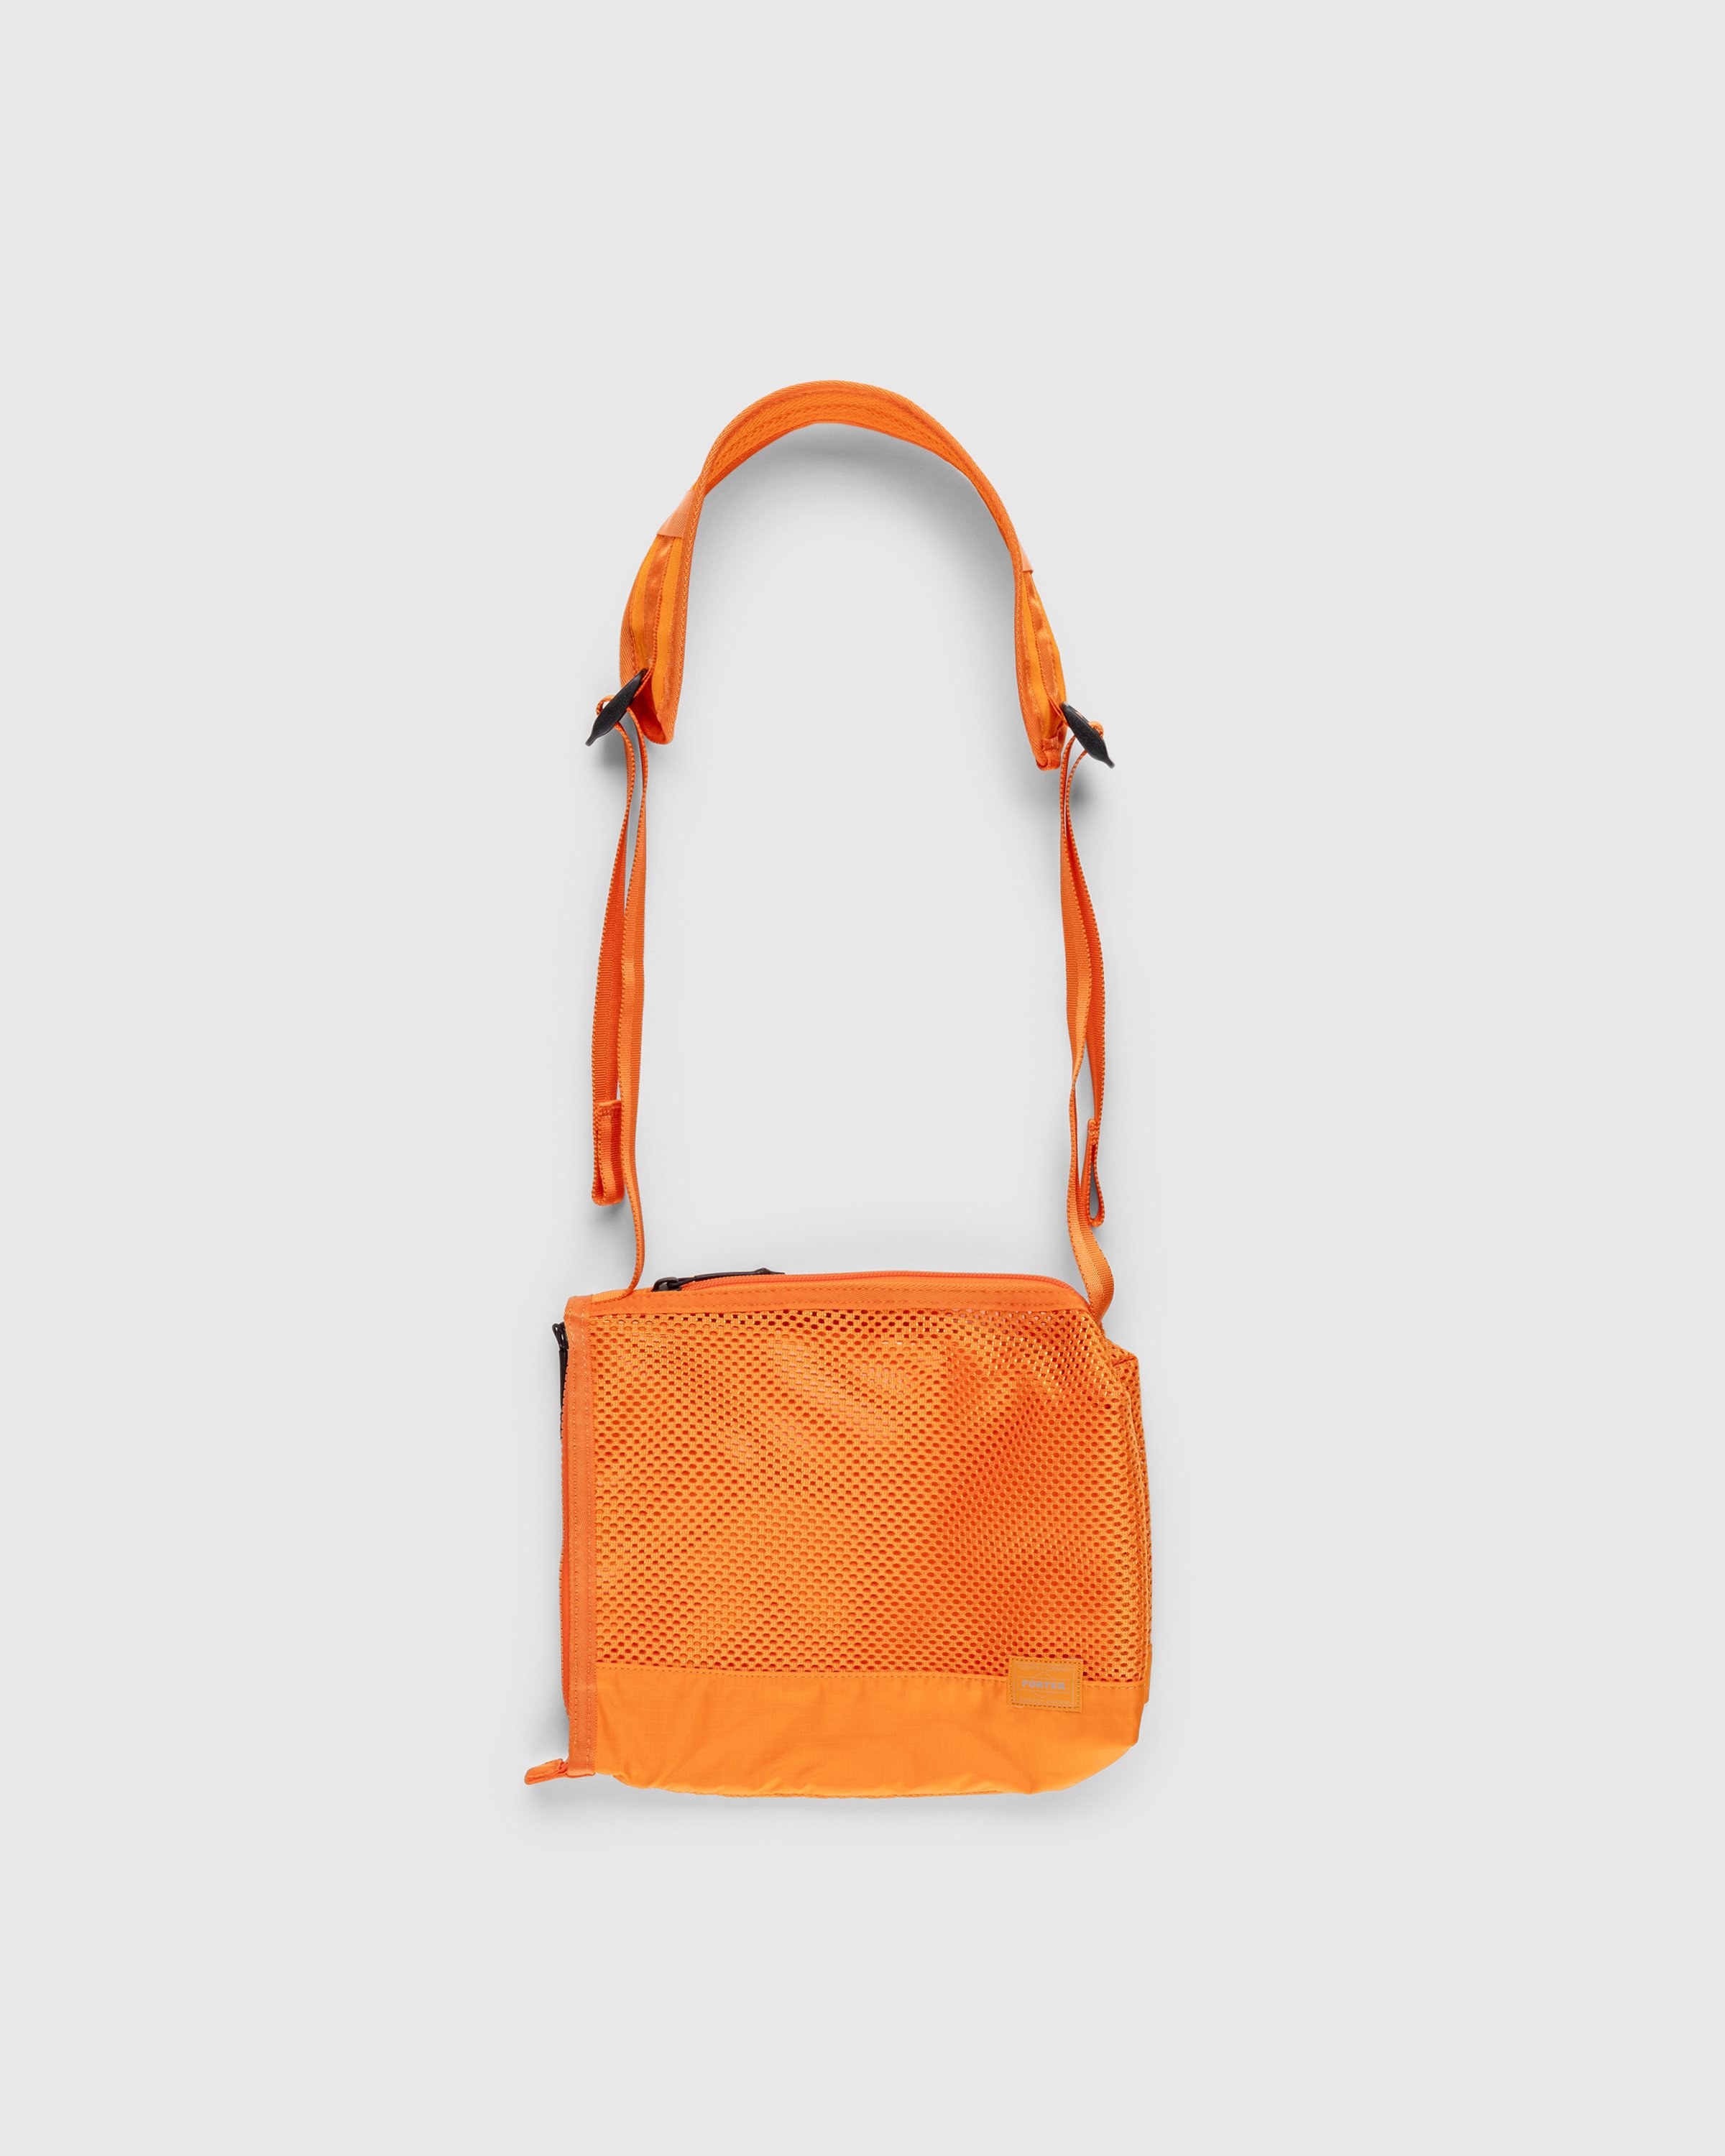 Porter-Yoshida & Co. - Screen Front Side Bag Orange - Accessories - Orange - Image 2